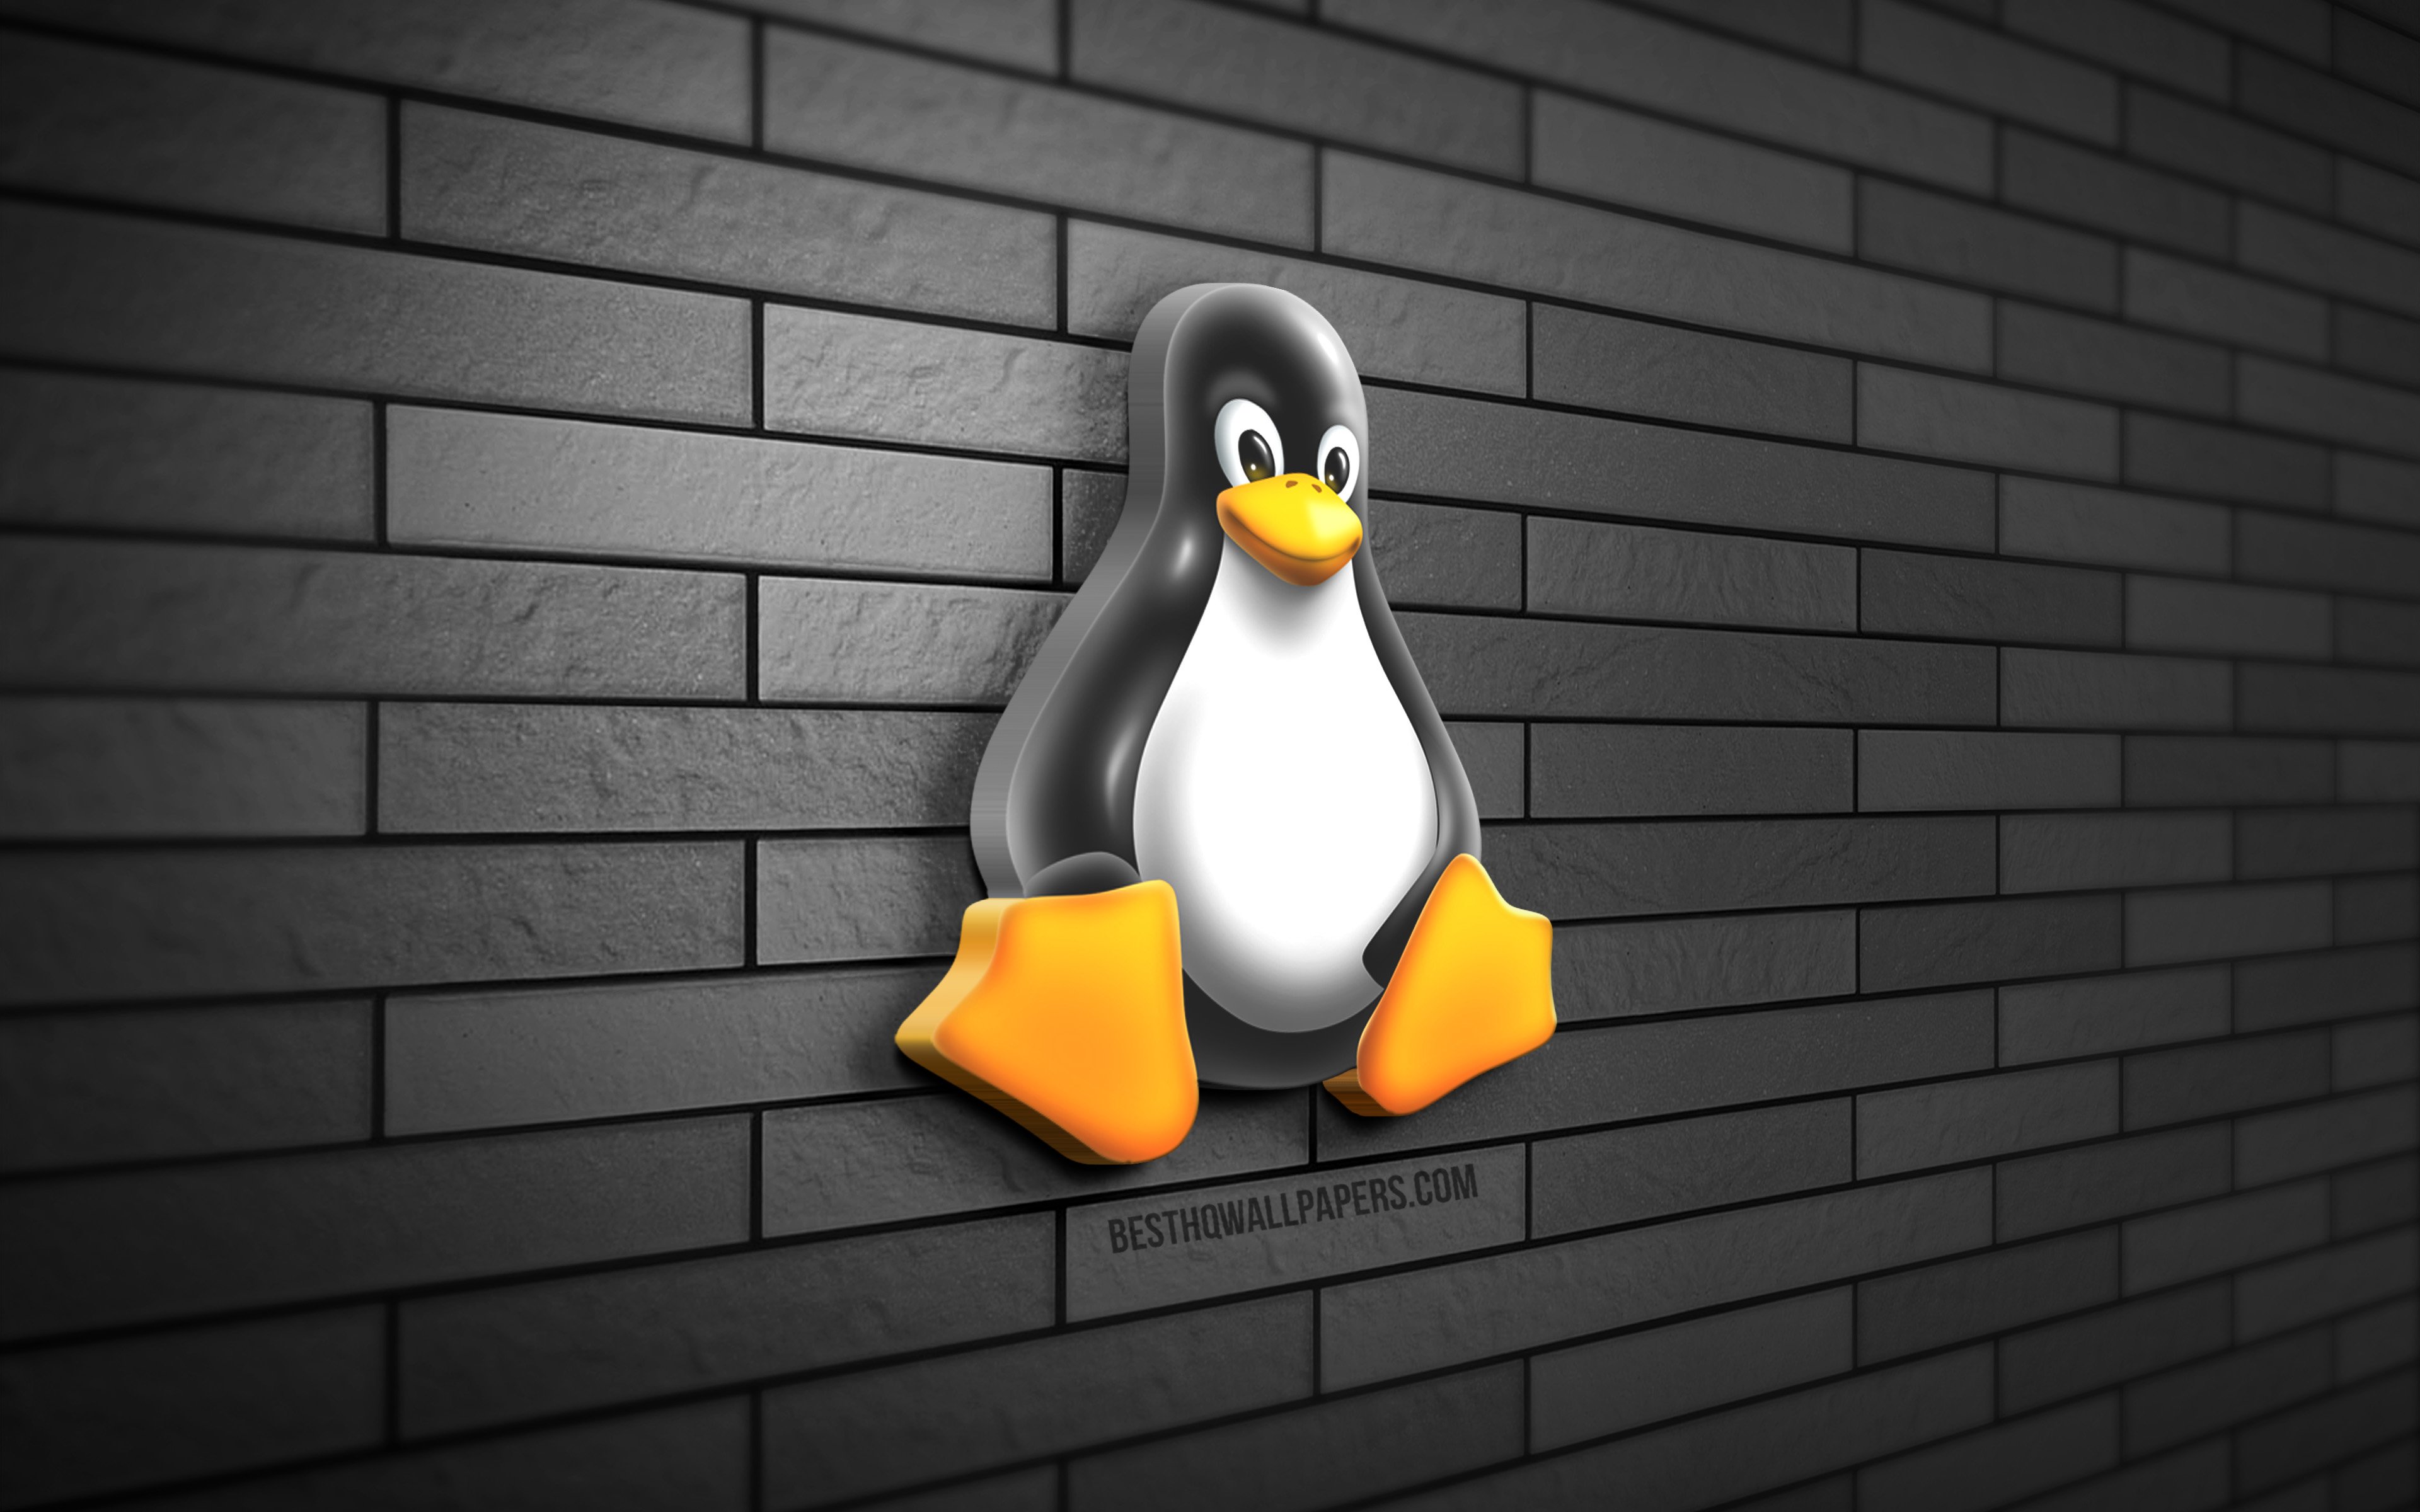 Mastering linux. Утка линукс арт. Linux Art. Master Linux.